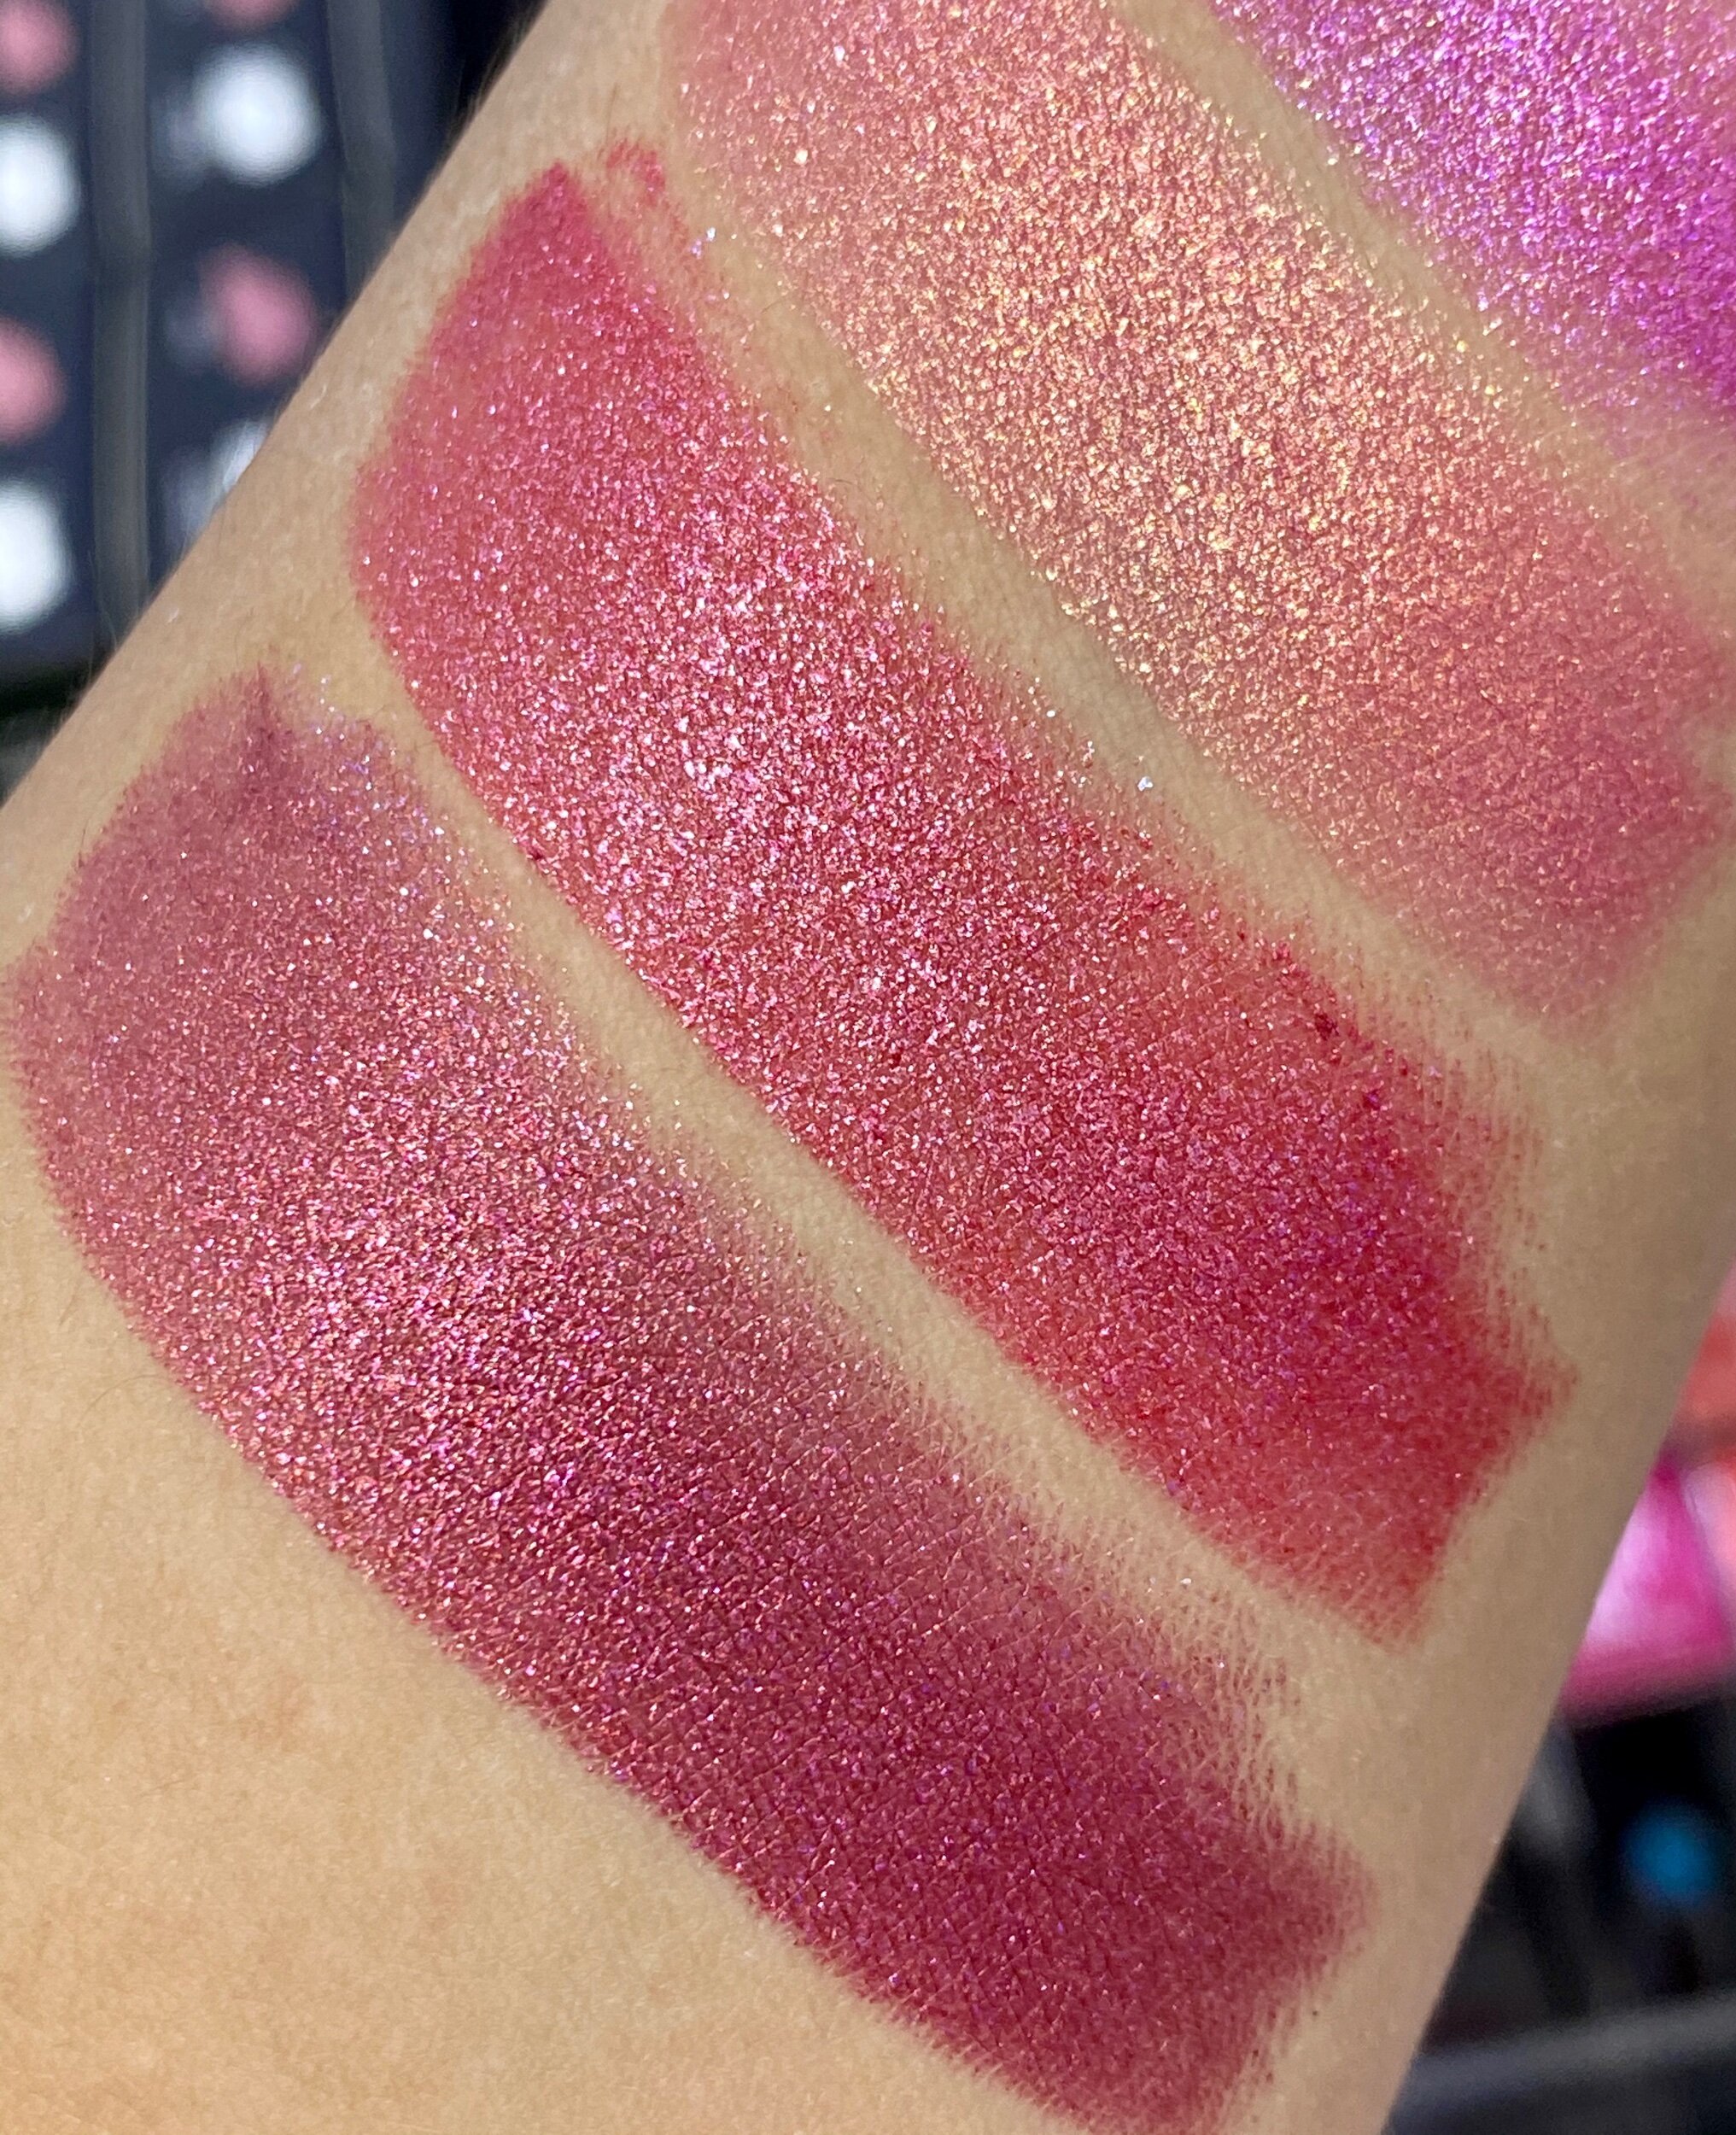 Make Up For Ever Rouge Artist Sparkle Lipsticks for Holiday 2020